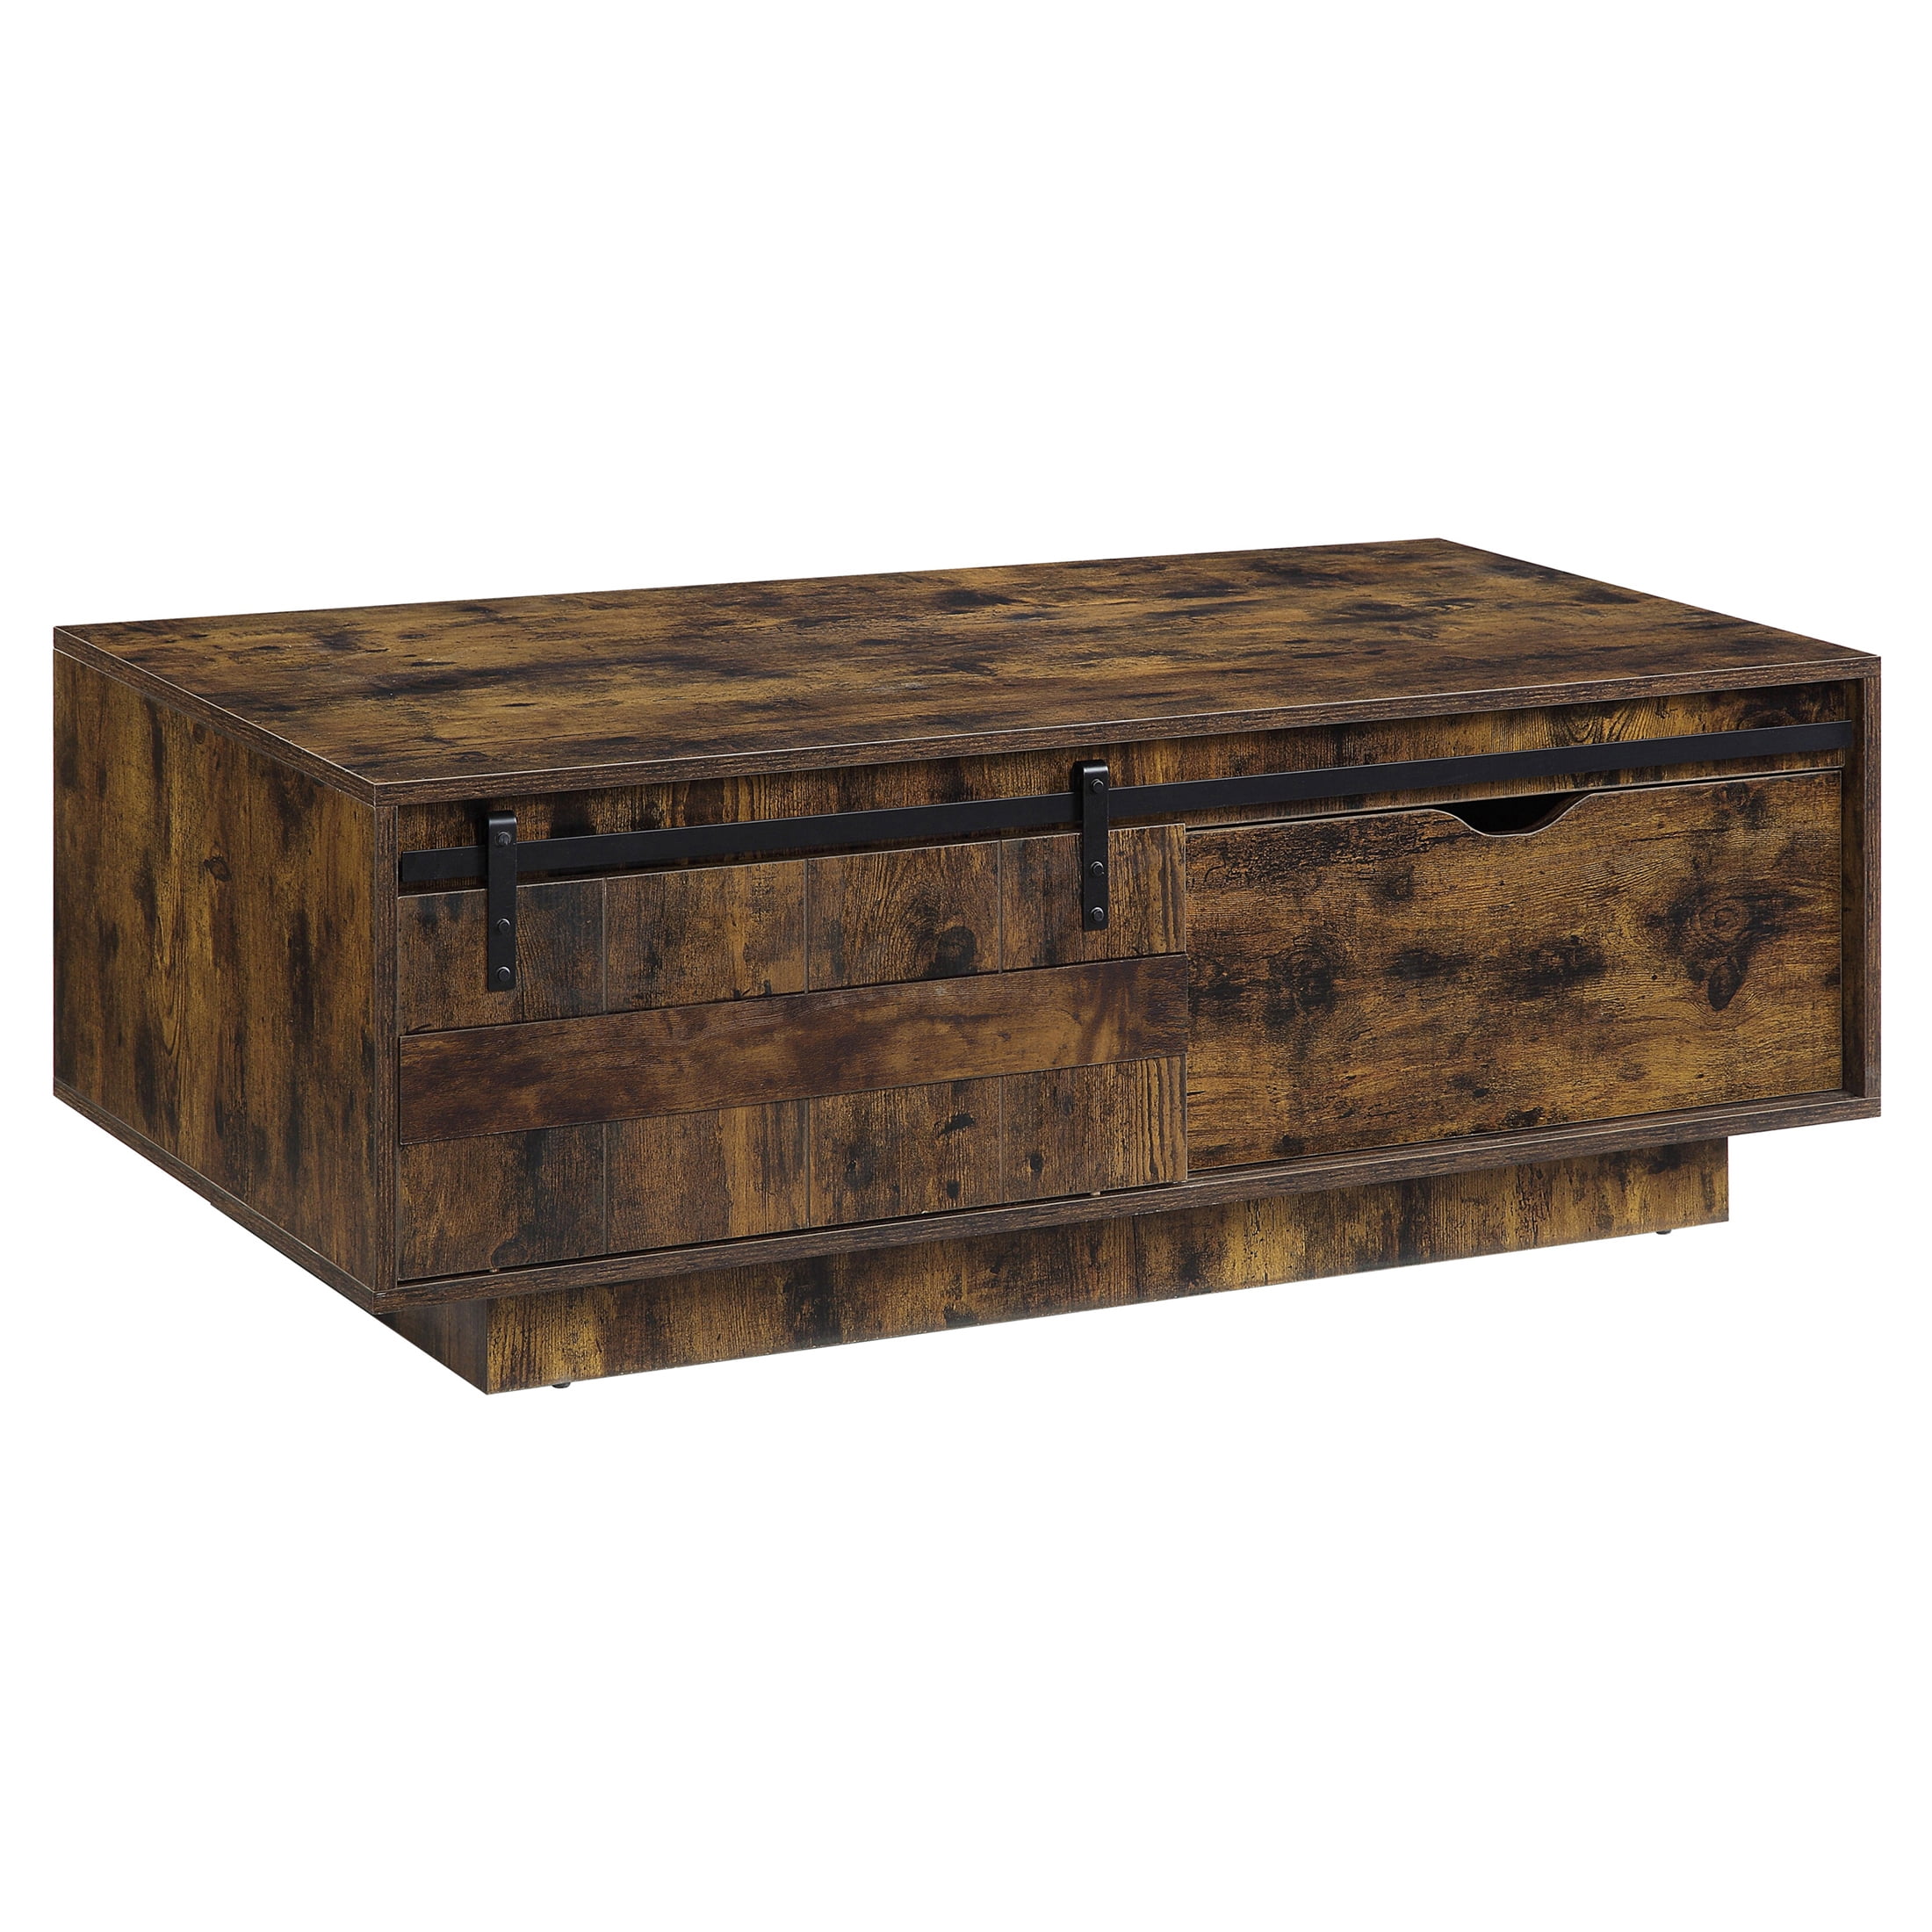 Picture of Acme Furniture LV01442 47 x 23 x 17 in. Bellarosa Coffee Table, Rustic Oak